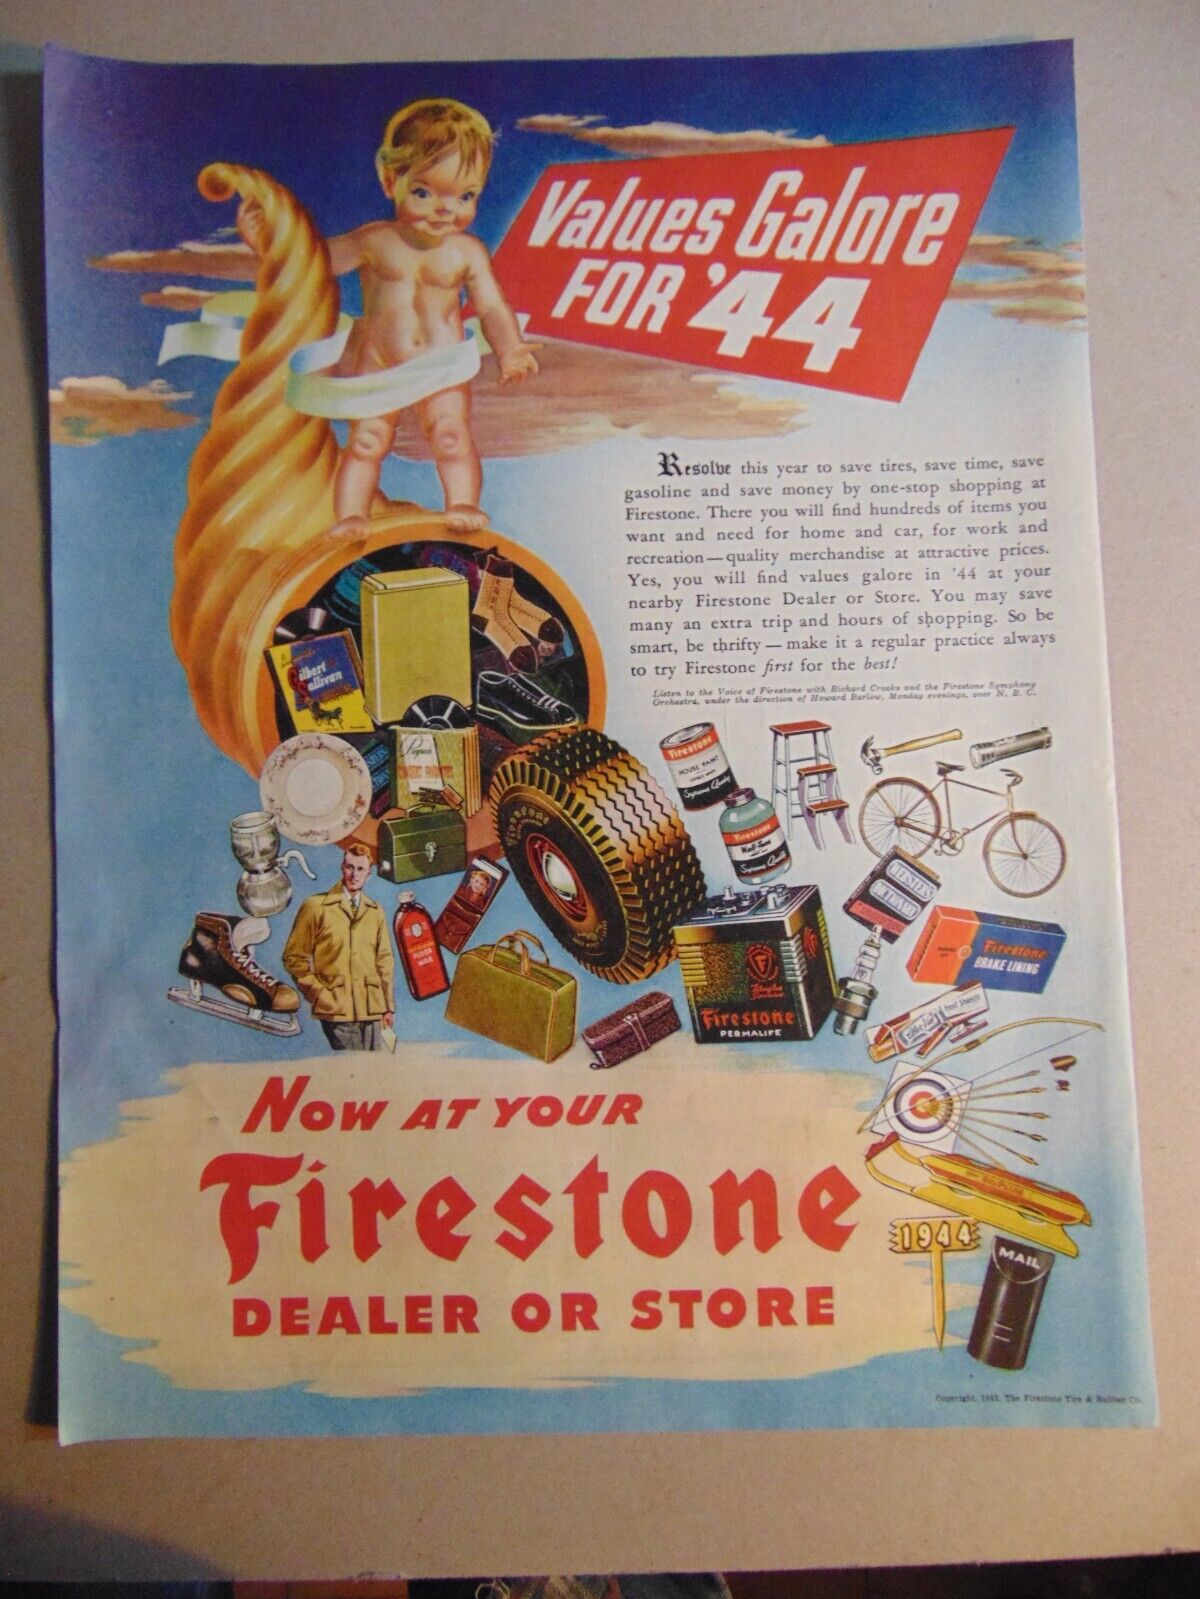 1944 FIRESTONE MERCHANDISE at Dealer or Store vintage print ad